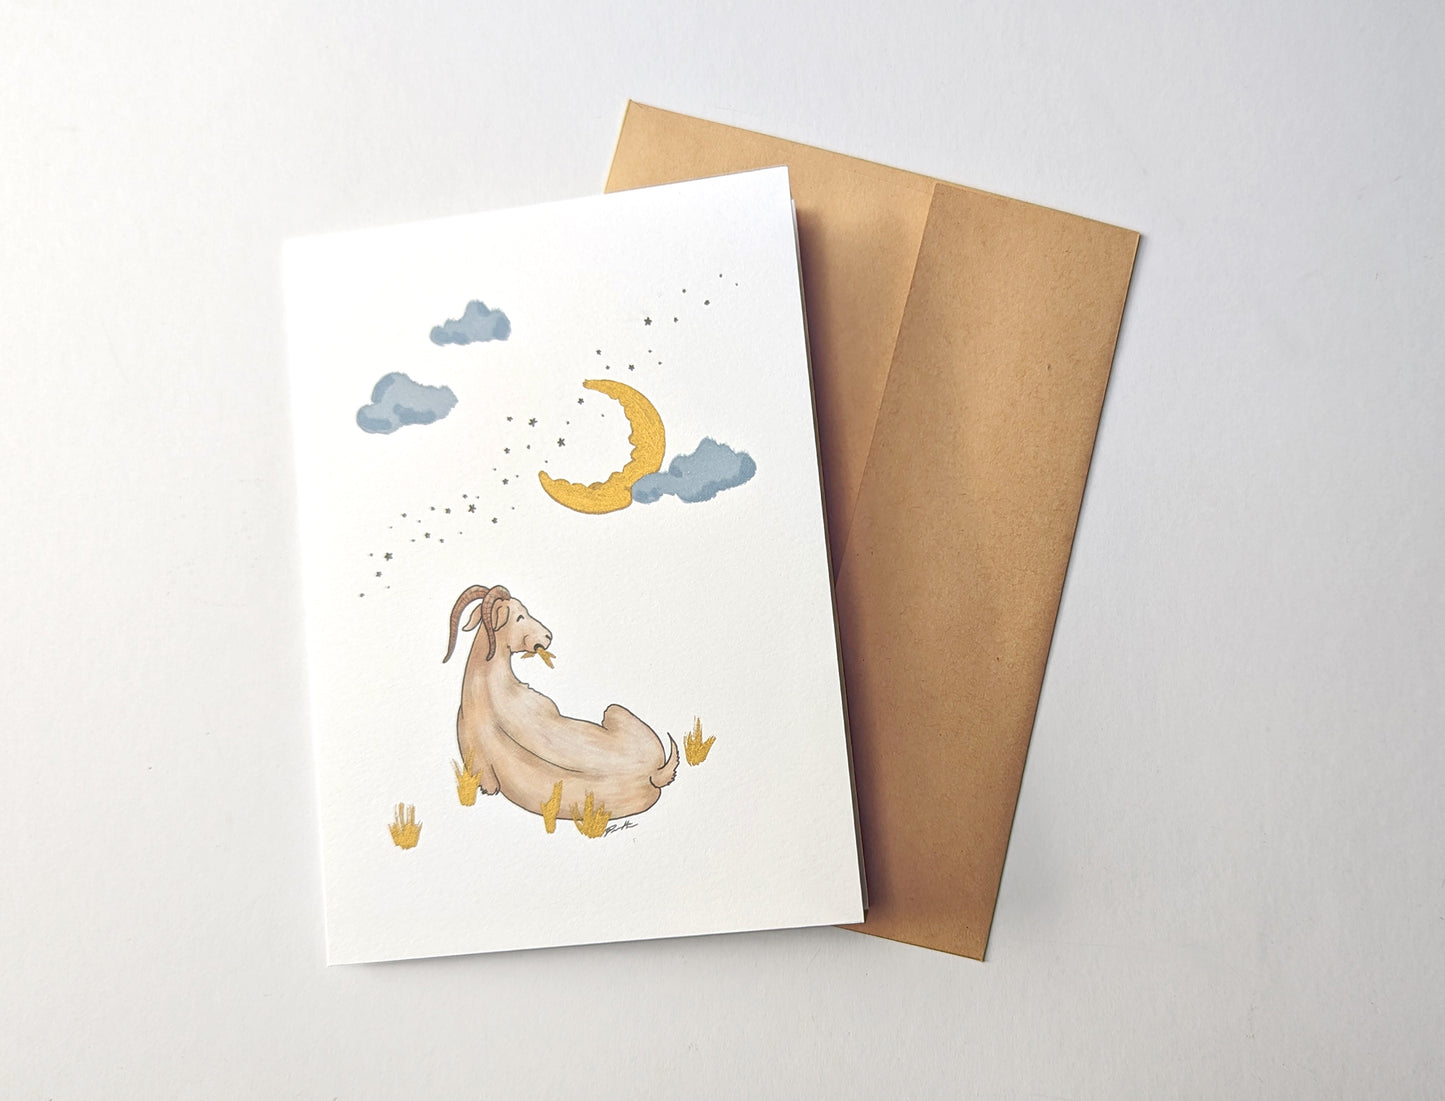 Goat Butt Greeting Card - Lunar Zodiac Series